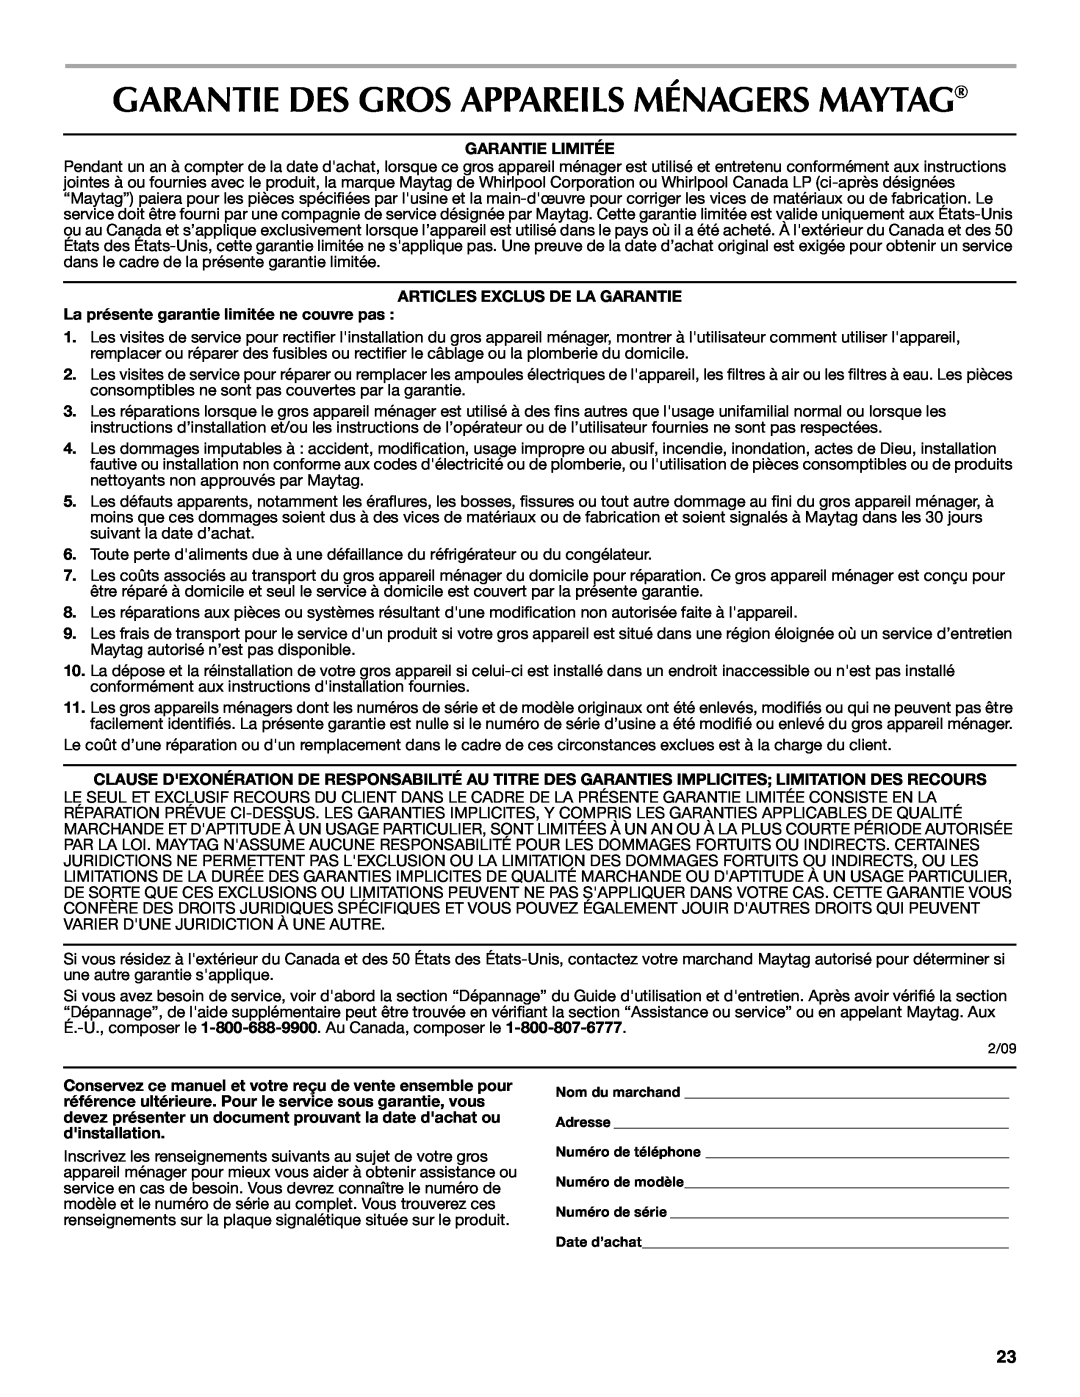 Maytag W10268401A manual Garantie Des Gros Appareils Ménagers Maytag, Garantie Limitée, Articles Exclus De La Garantie 